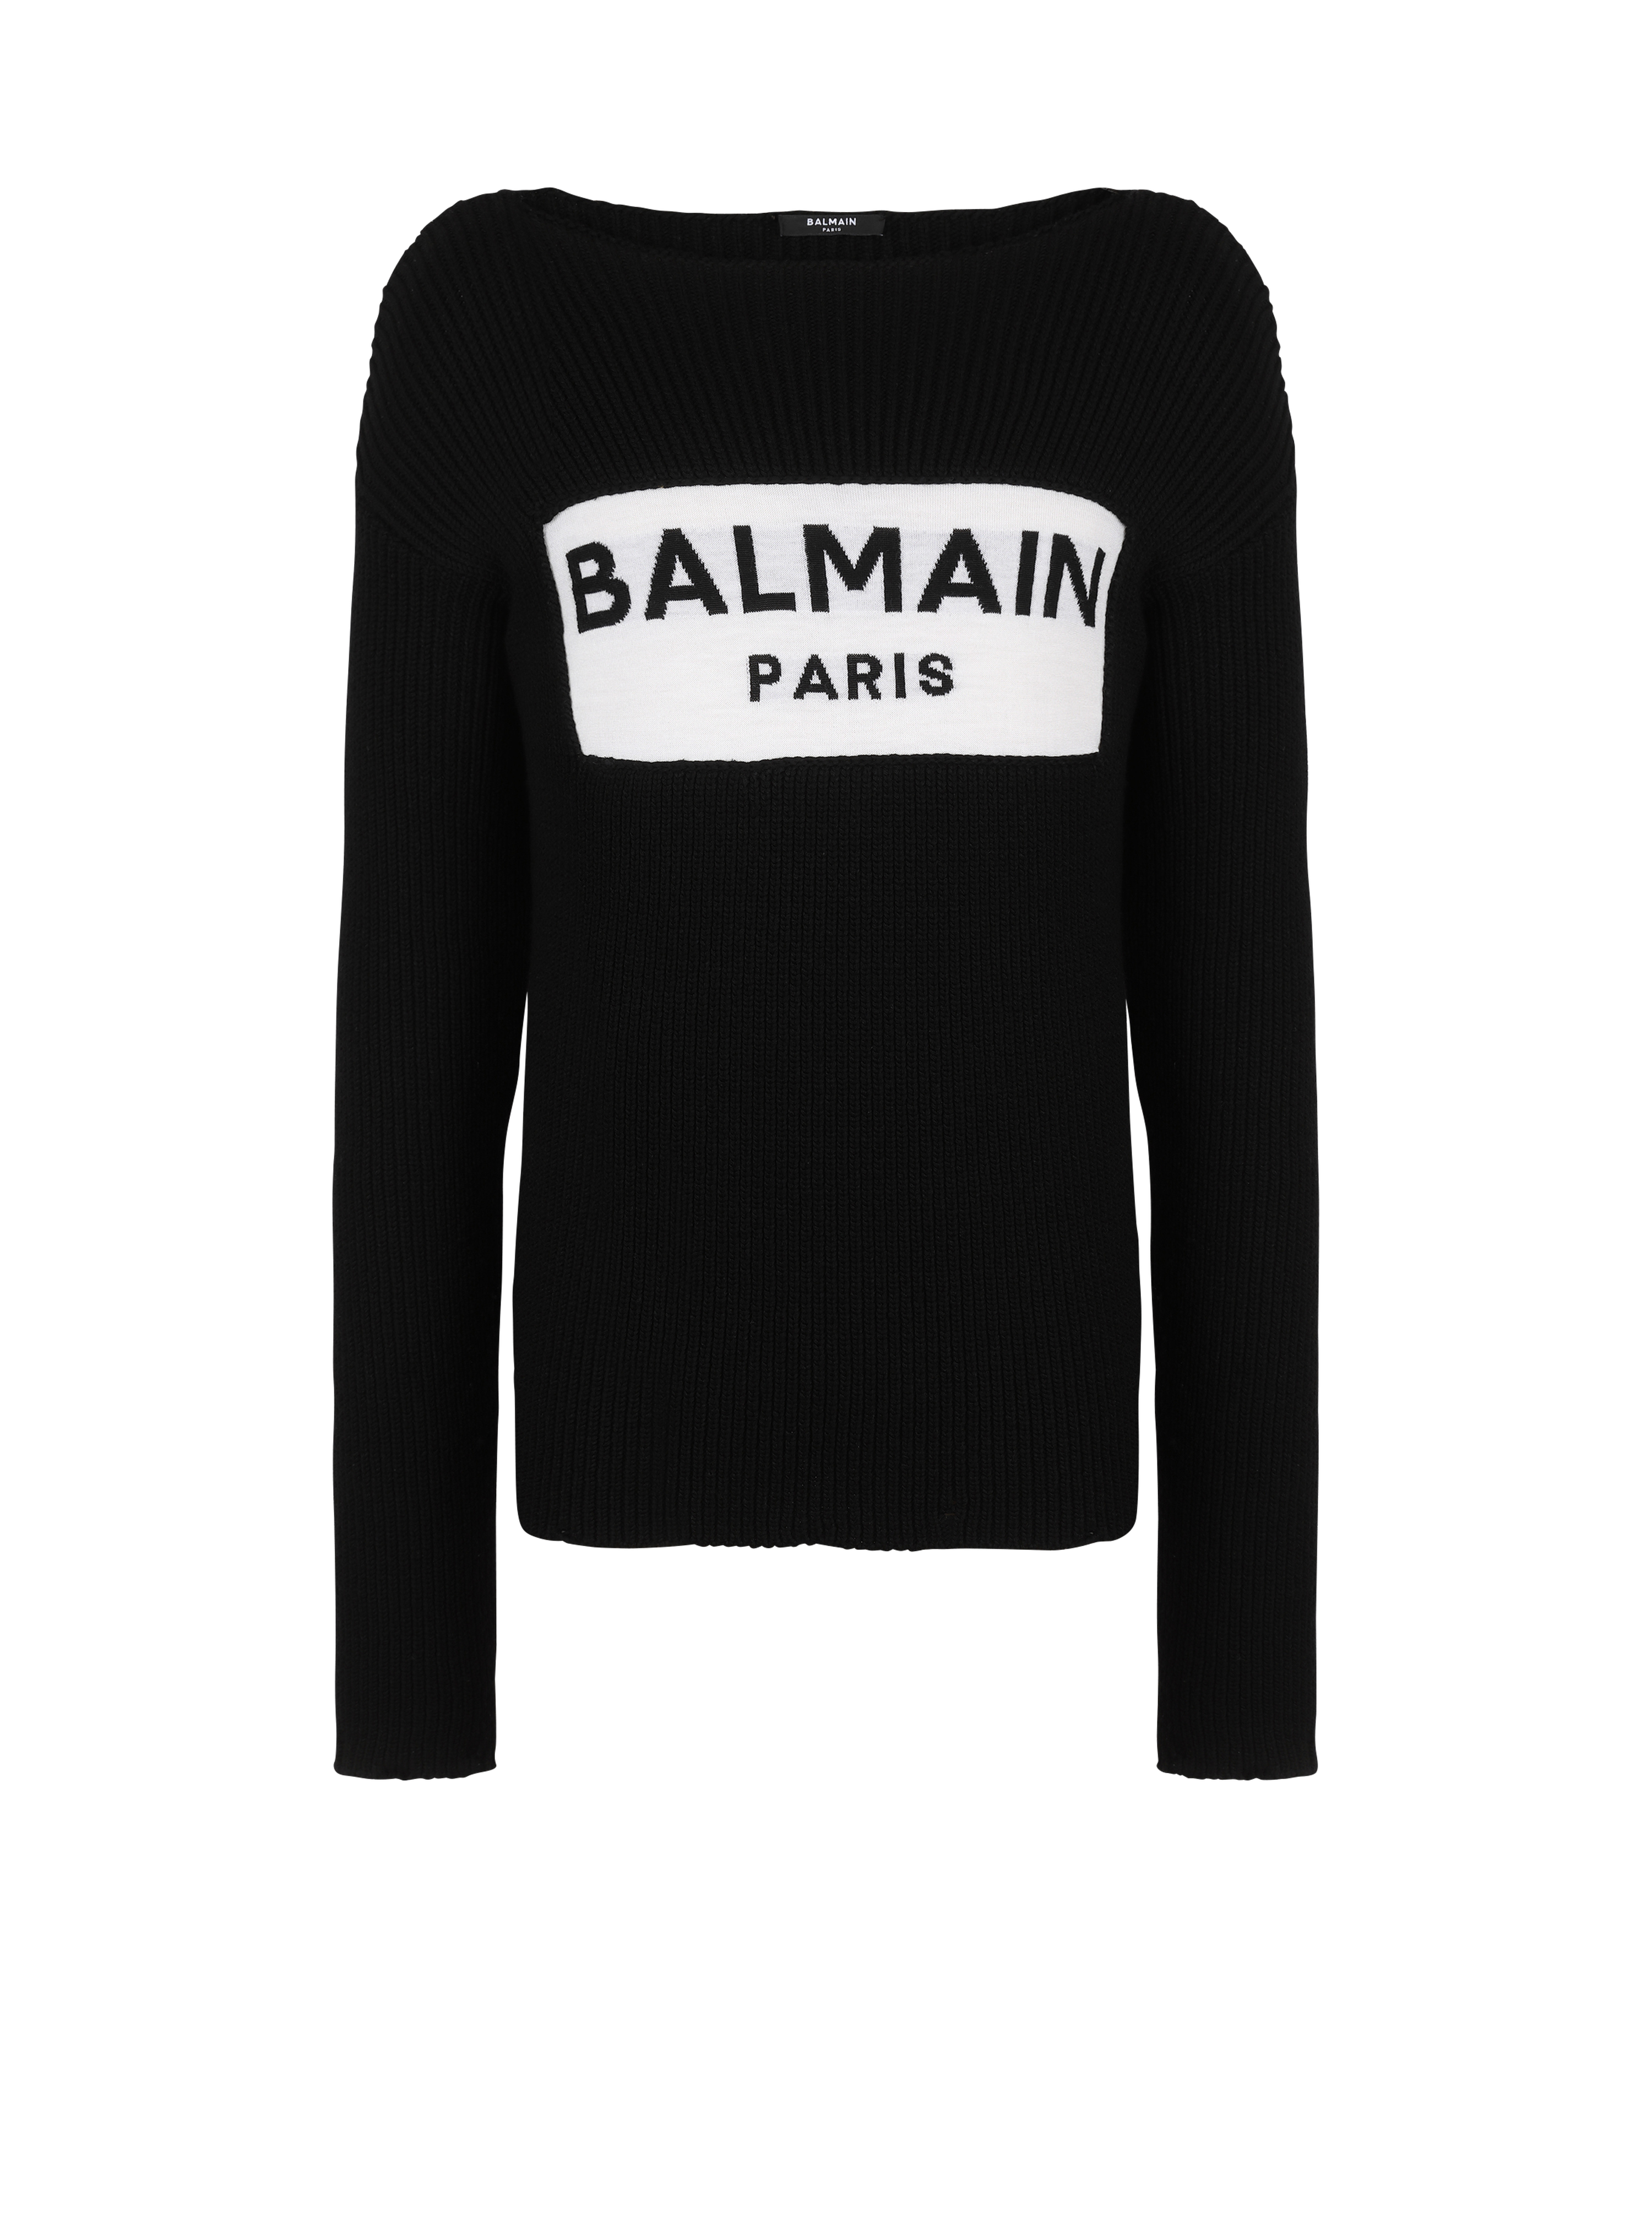 Wool jumper with Balmain Paris logo, black